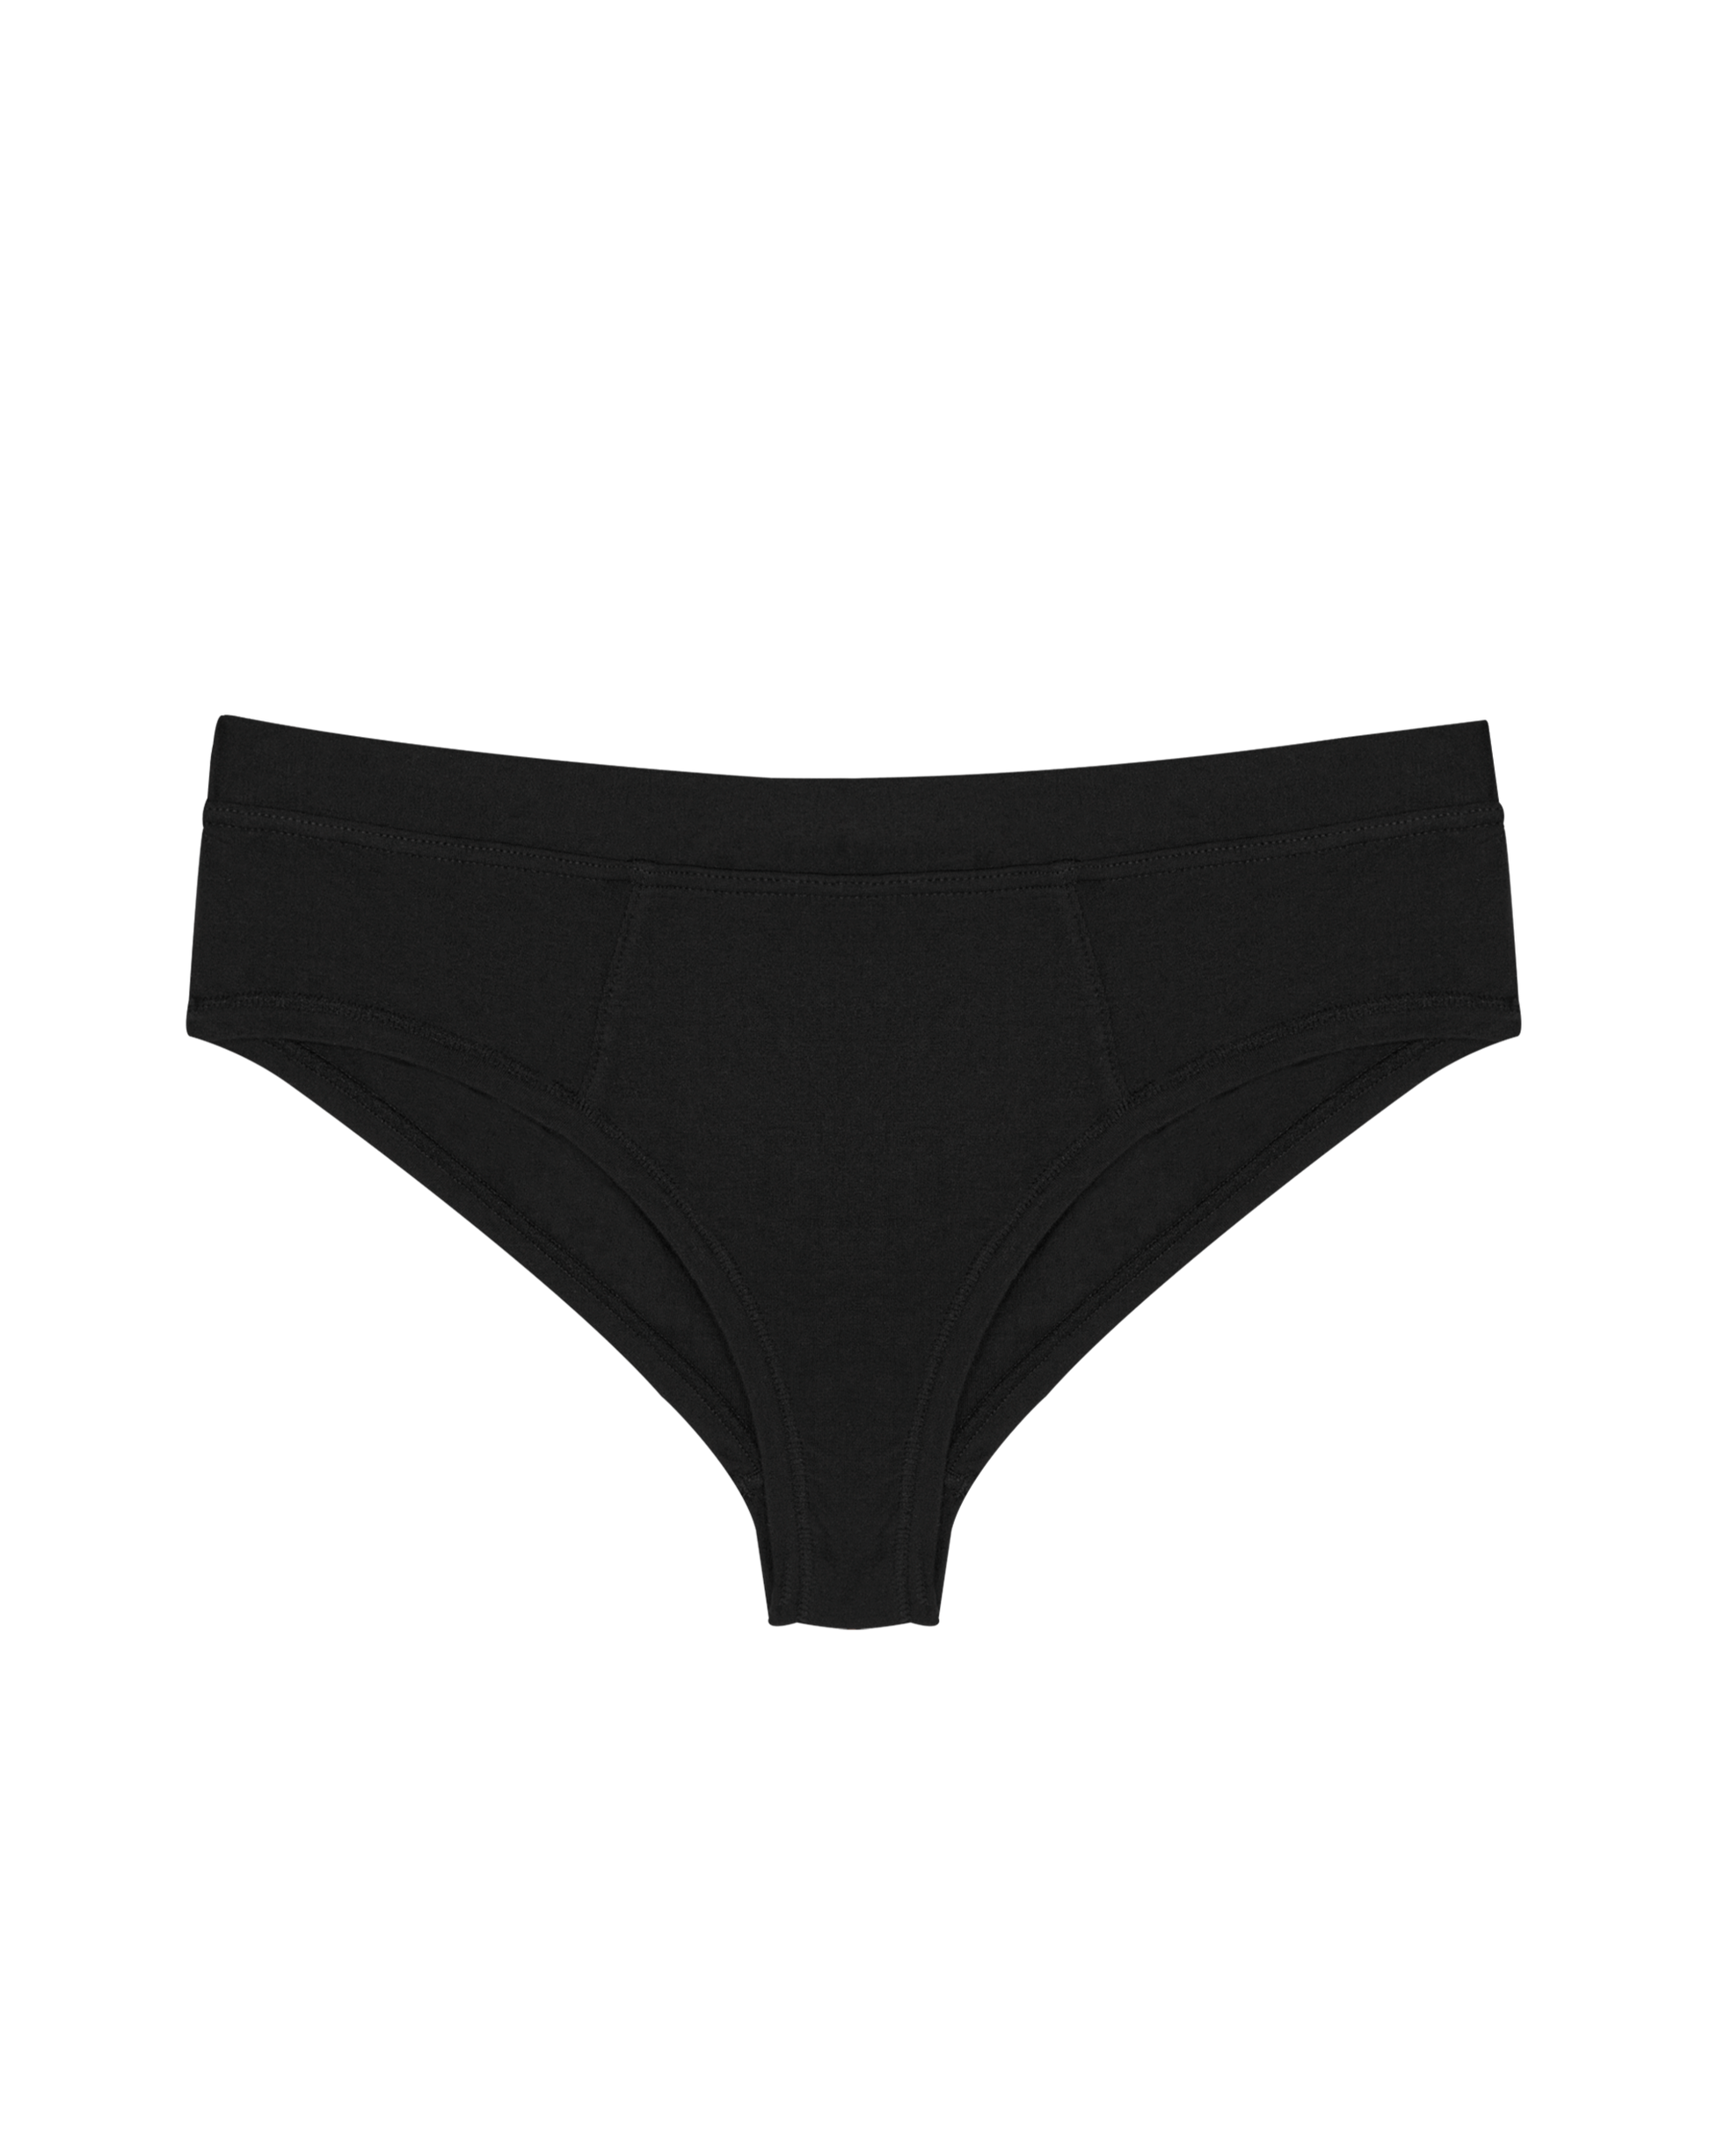 Cheeky – huha underwear